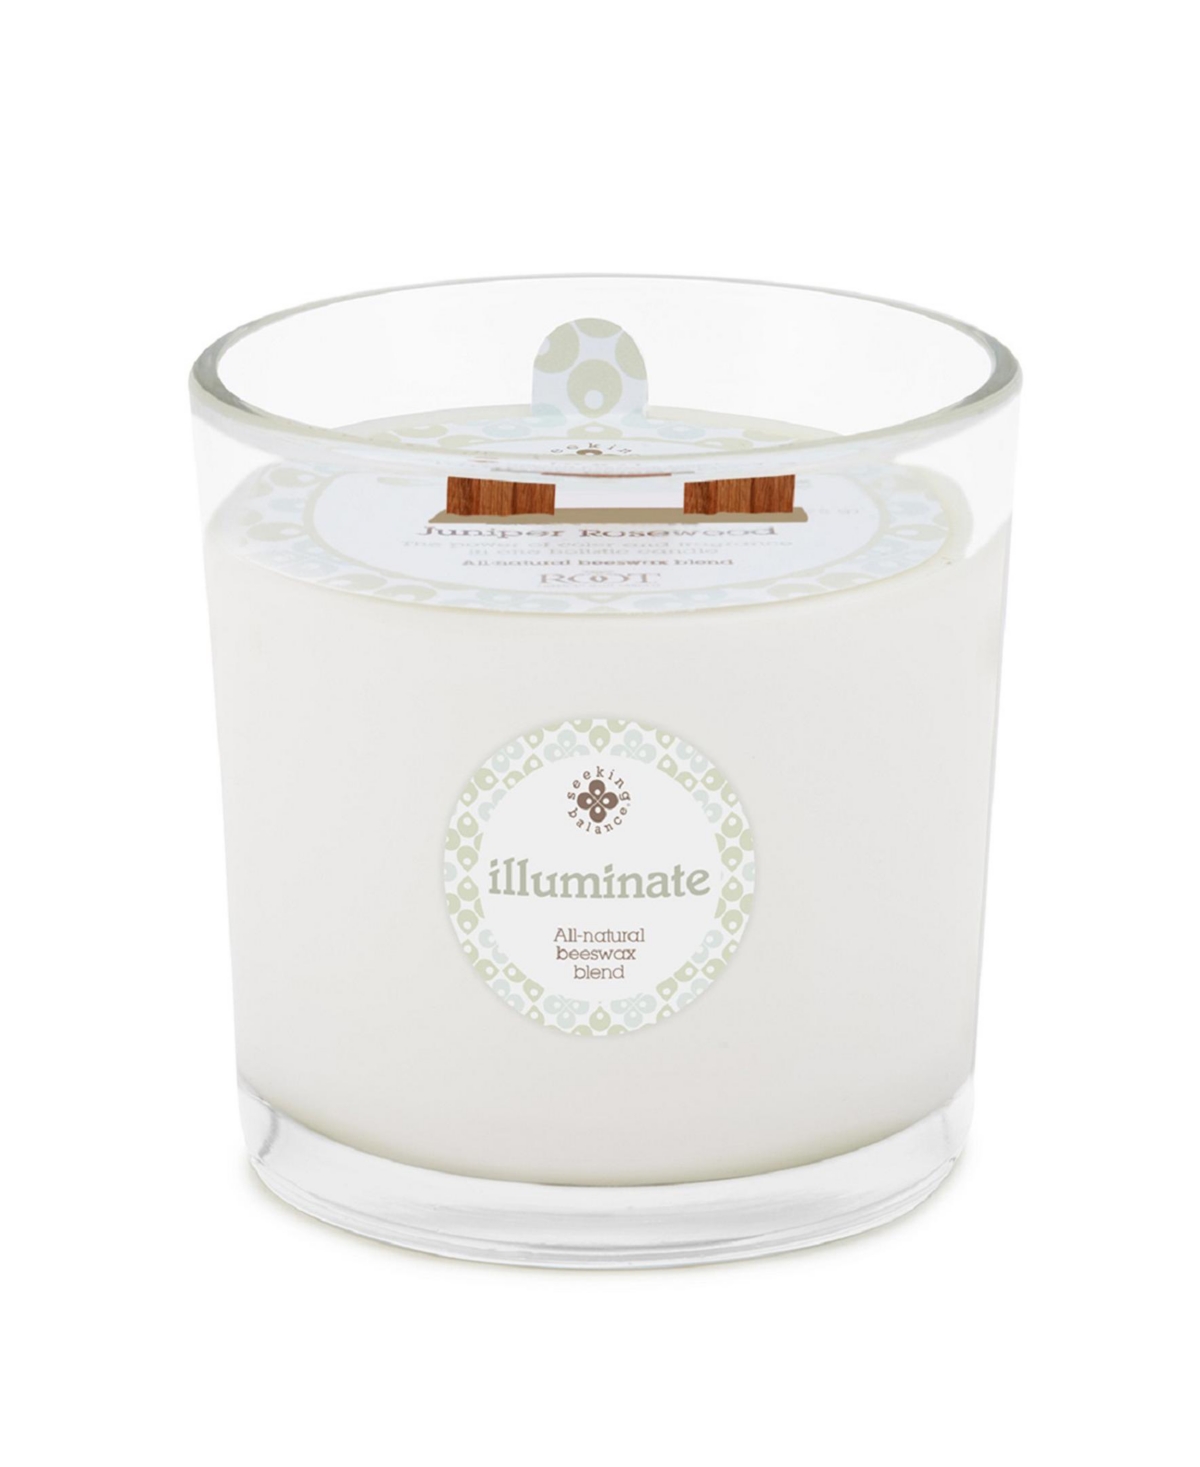 Seeking Balance 2 Wick Illuminate Juniper Rosewood Spa Jar Candle, 12 oz - Natural